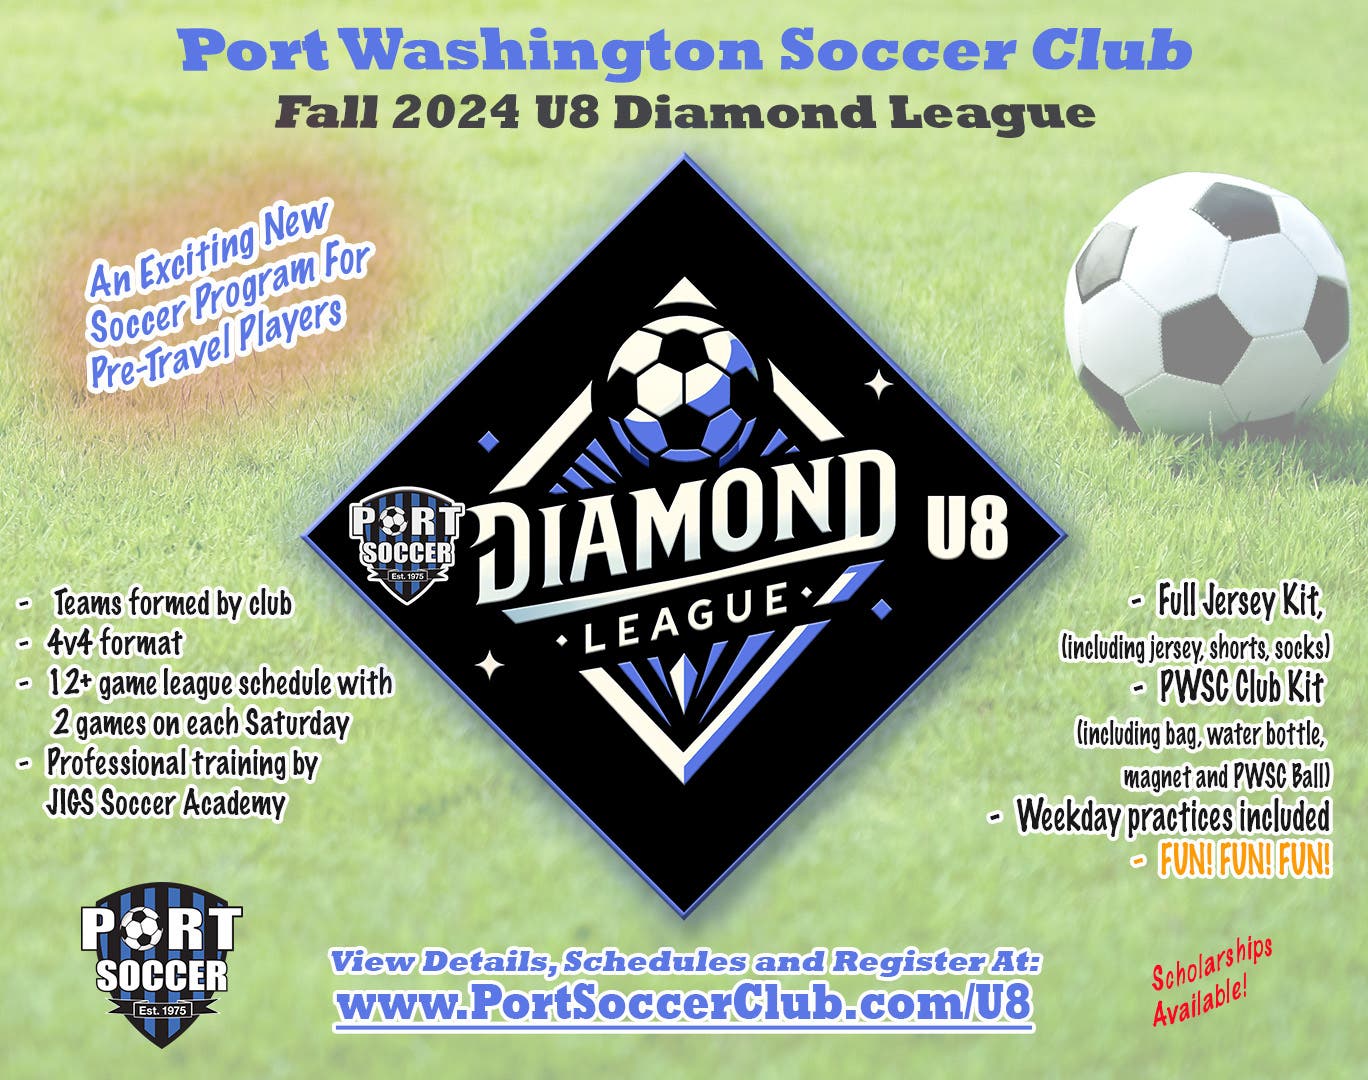 Port Washington Soccer Club's U8 Diamond League